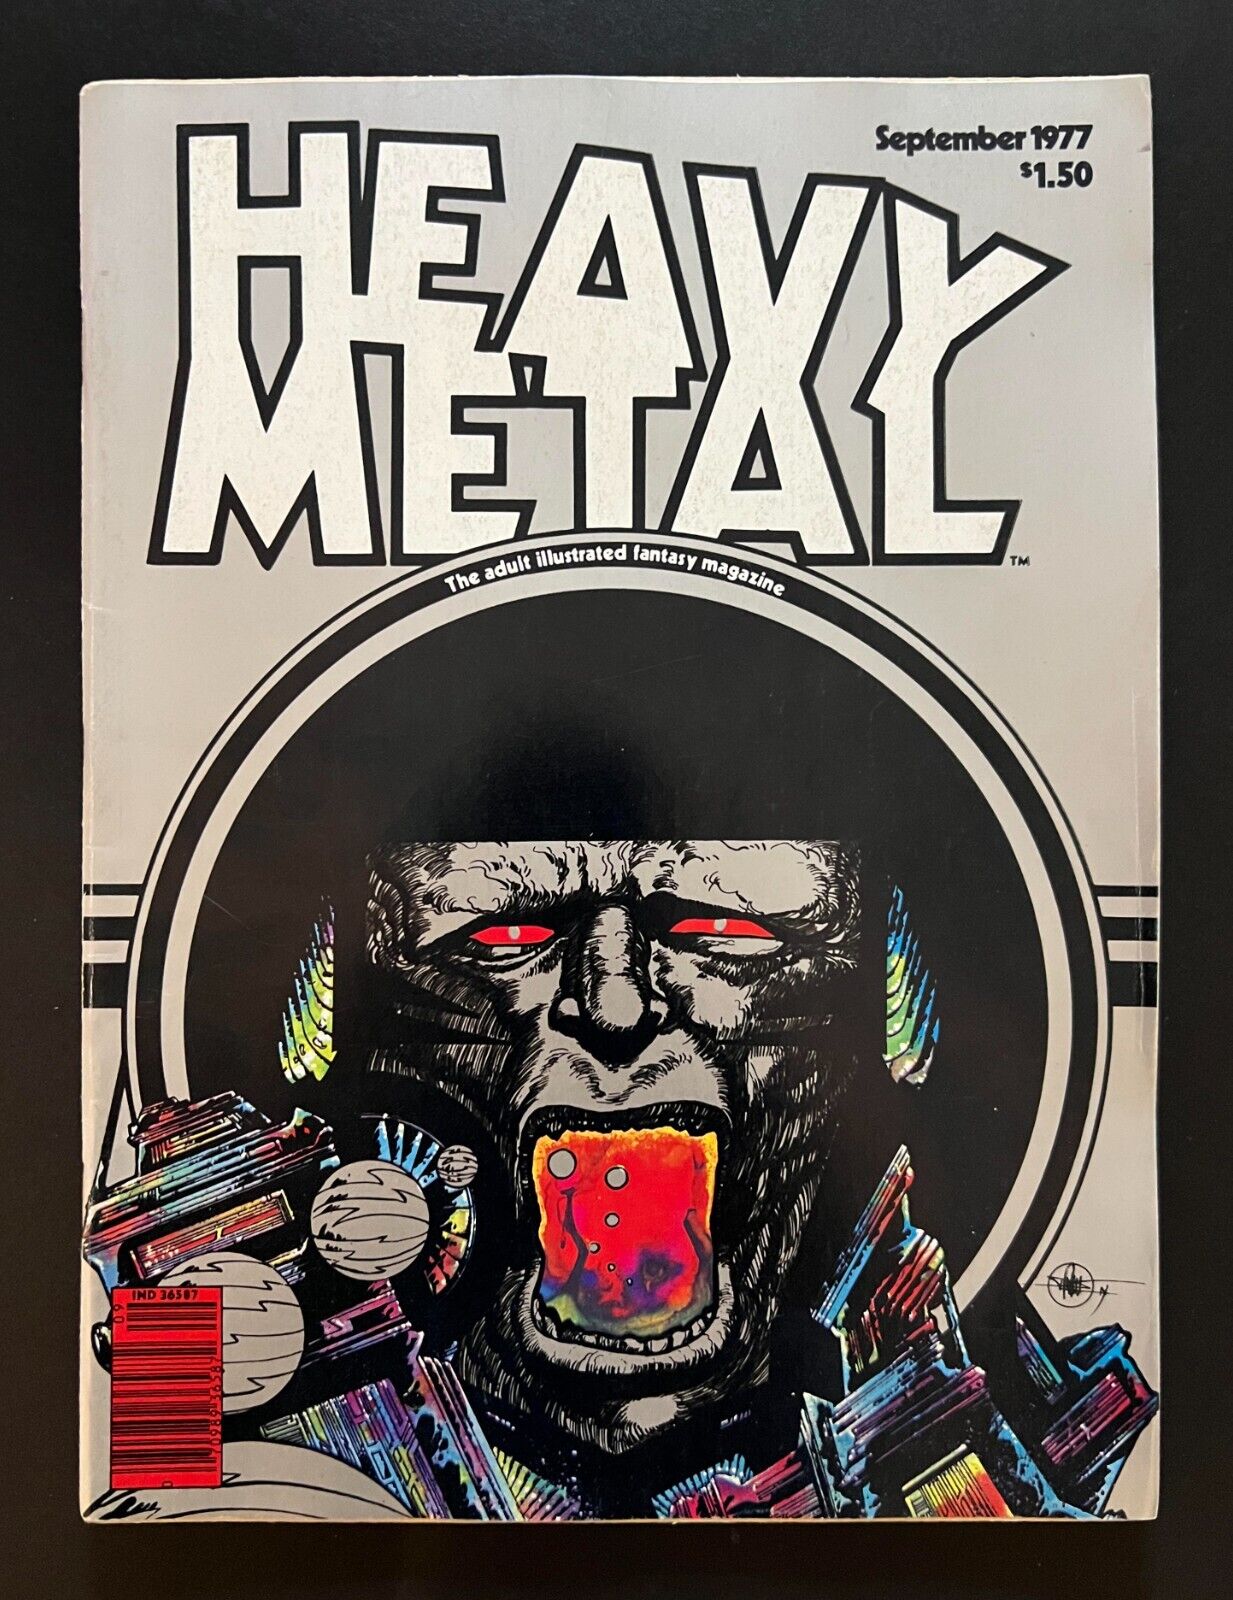 HEAVY METAL MAGAZINE #6 September 1977 Corben, Moebius, Cover By Druillet